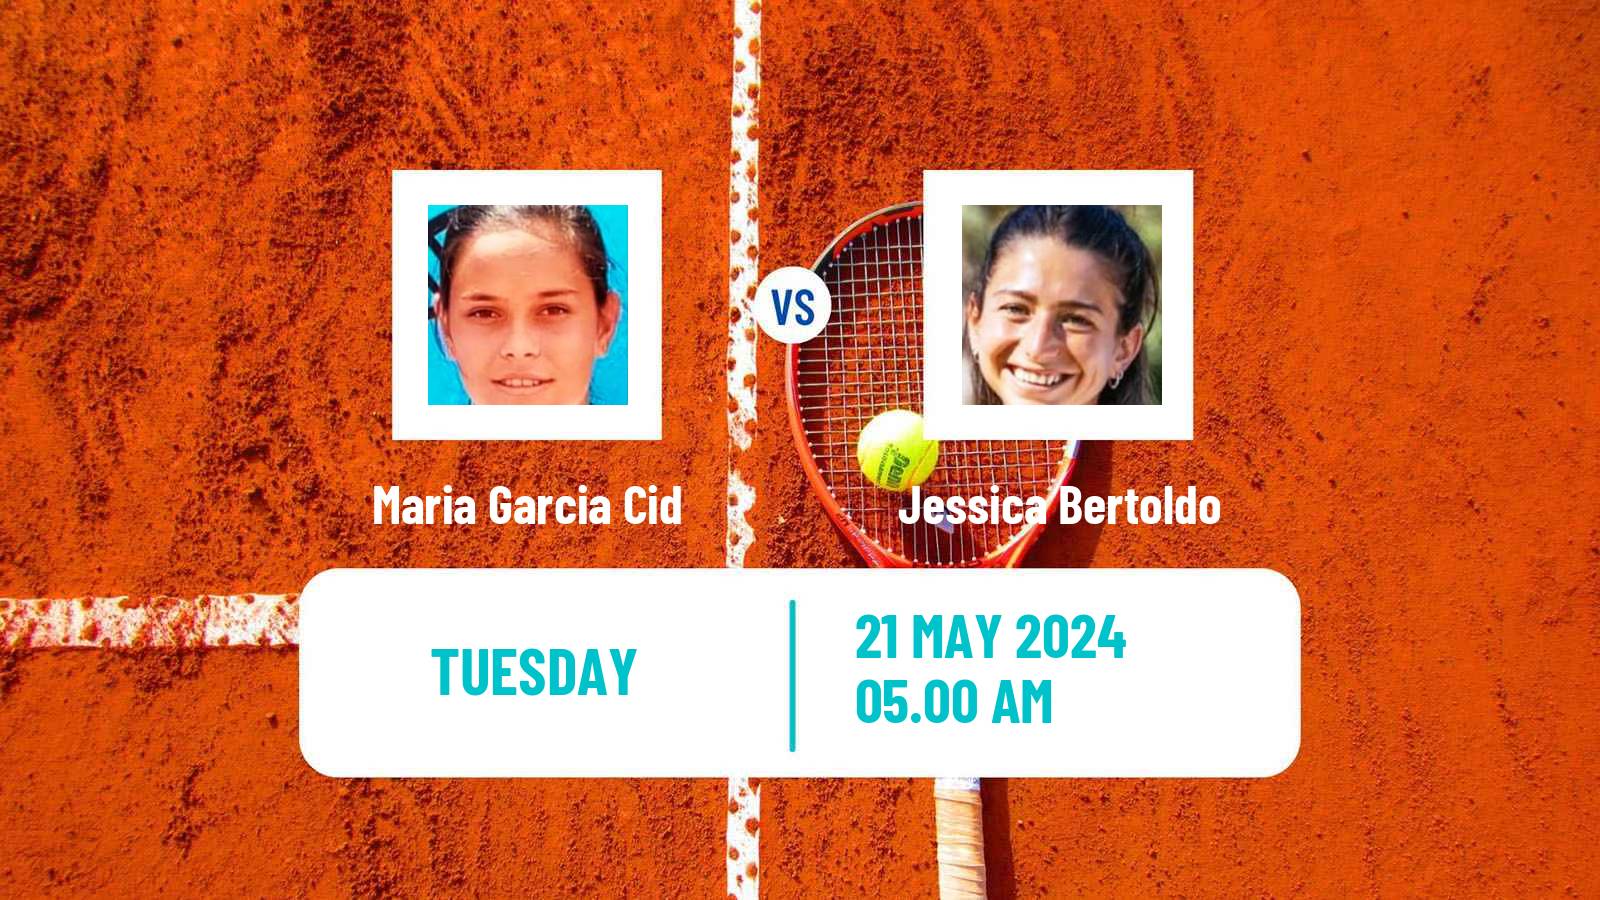 Tennis ITF W15 Bucharest 2 Women Maria Garcia Cid - Jessica Bertoldo